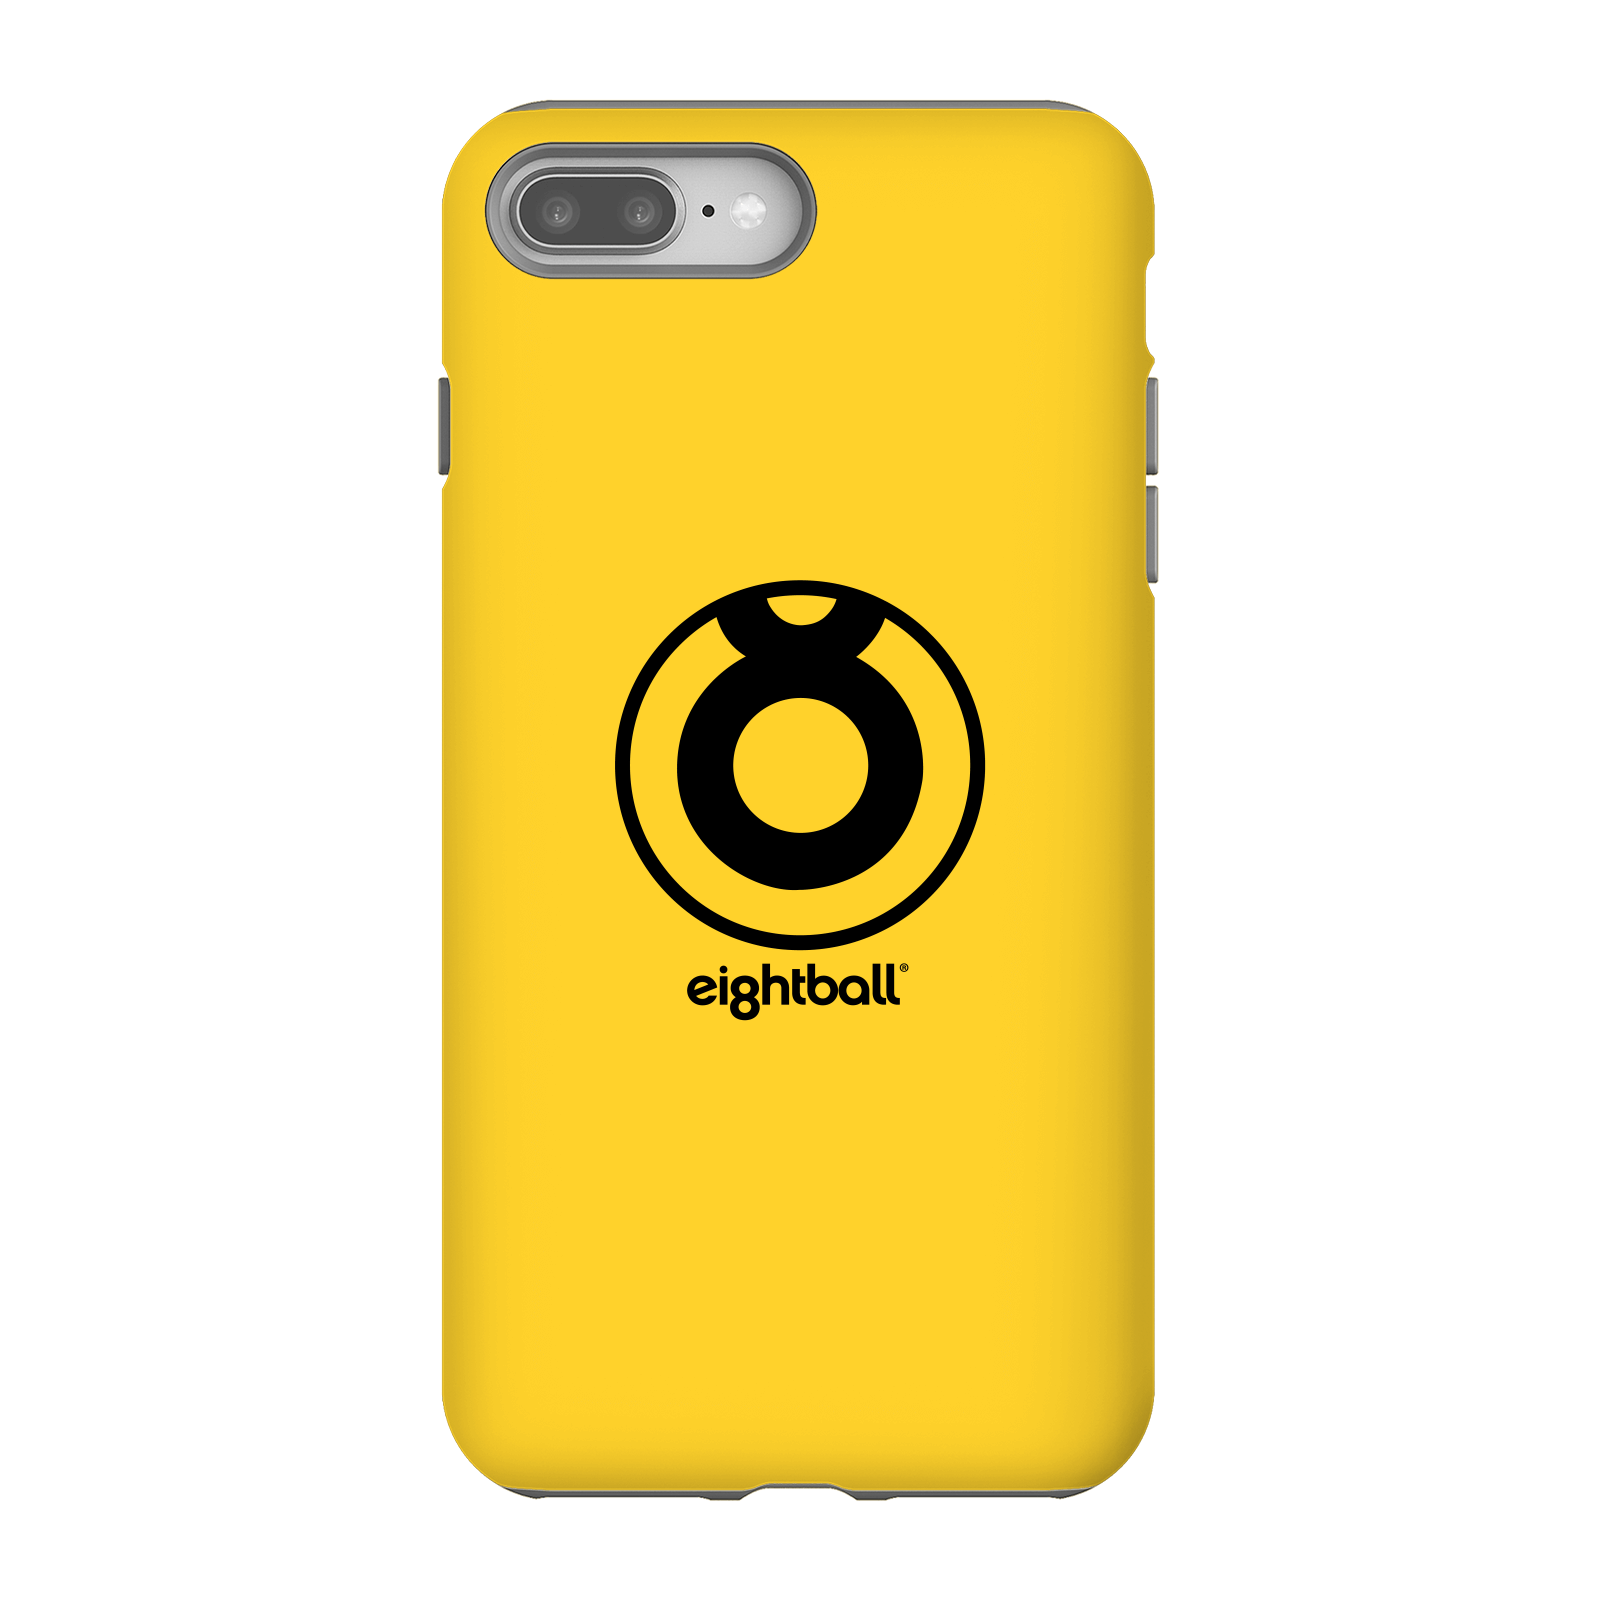 Funda Móvil Ei8htball Large Circle Logo para iPhone y Android - iPhone 8 Plus - Carcasa doble capa - Brillante